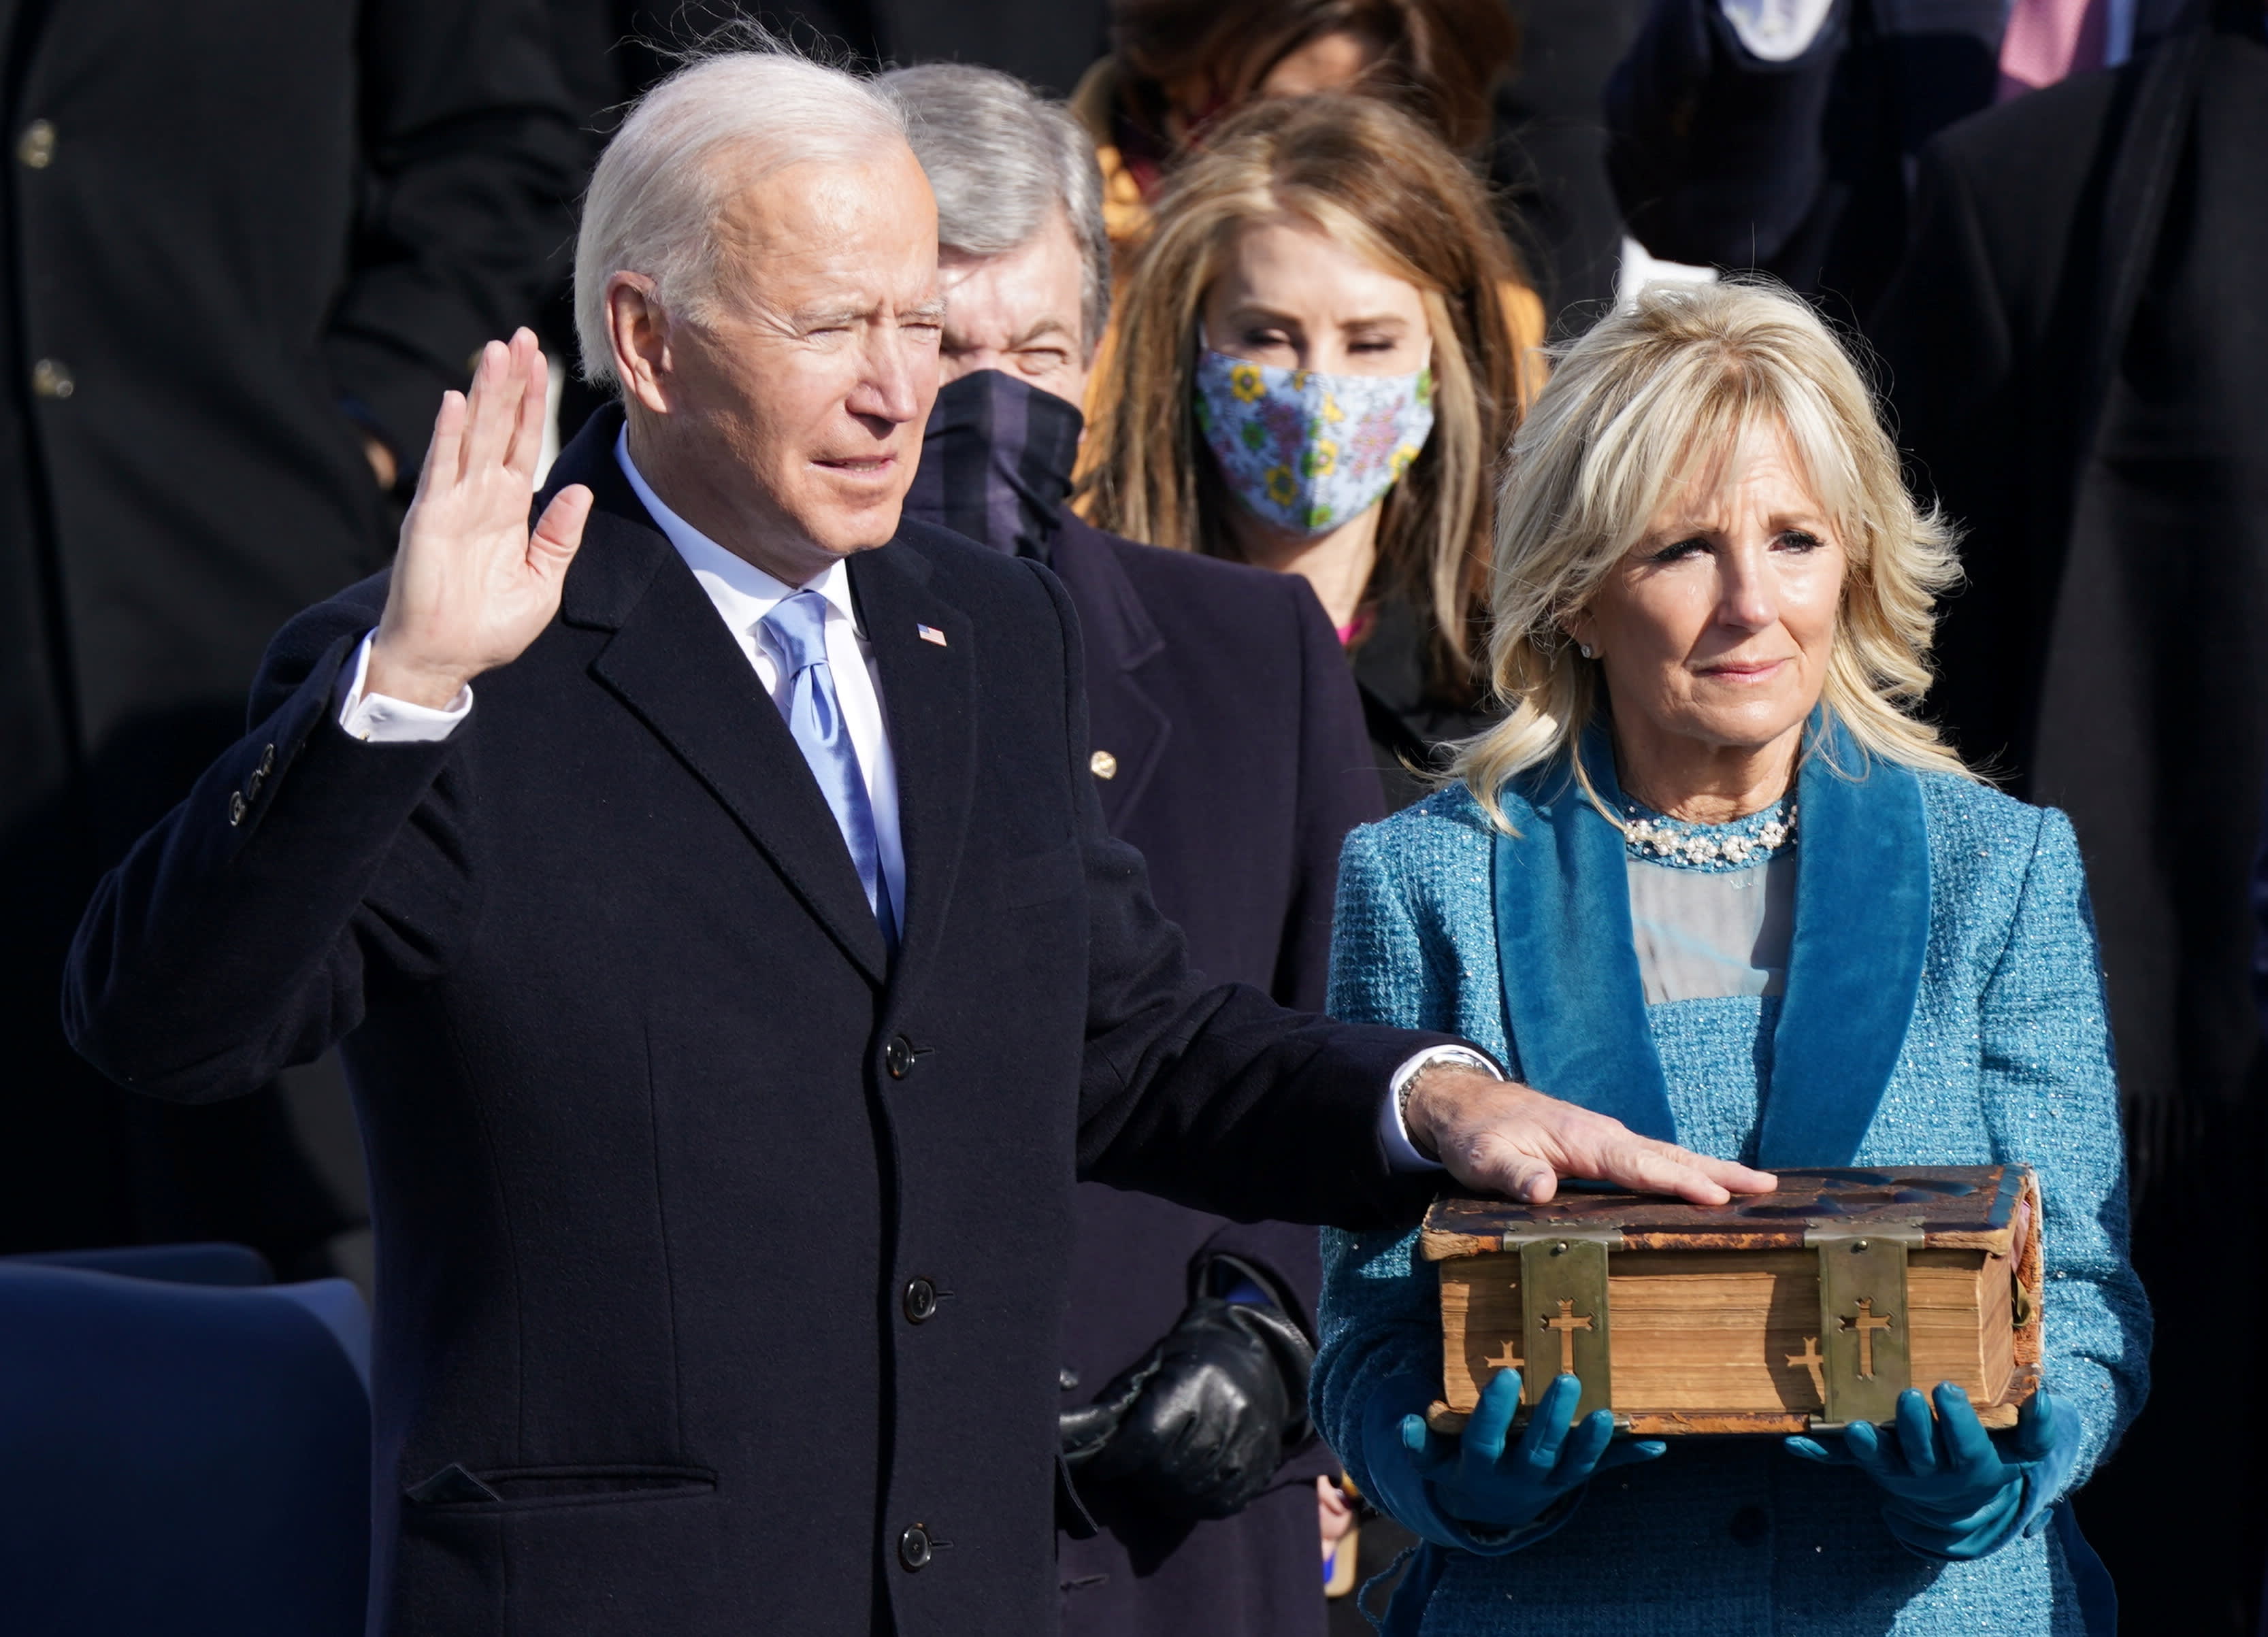 Joe Biden sworn in as 46th president of the United States